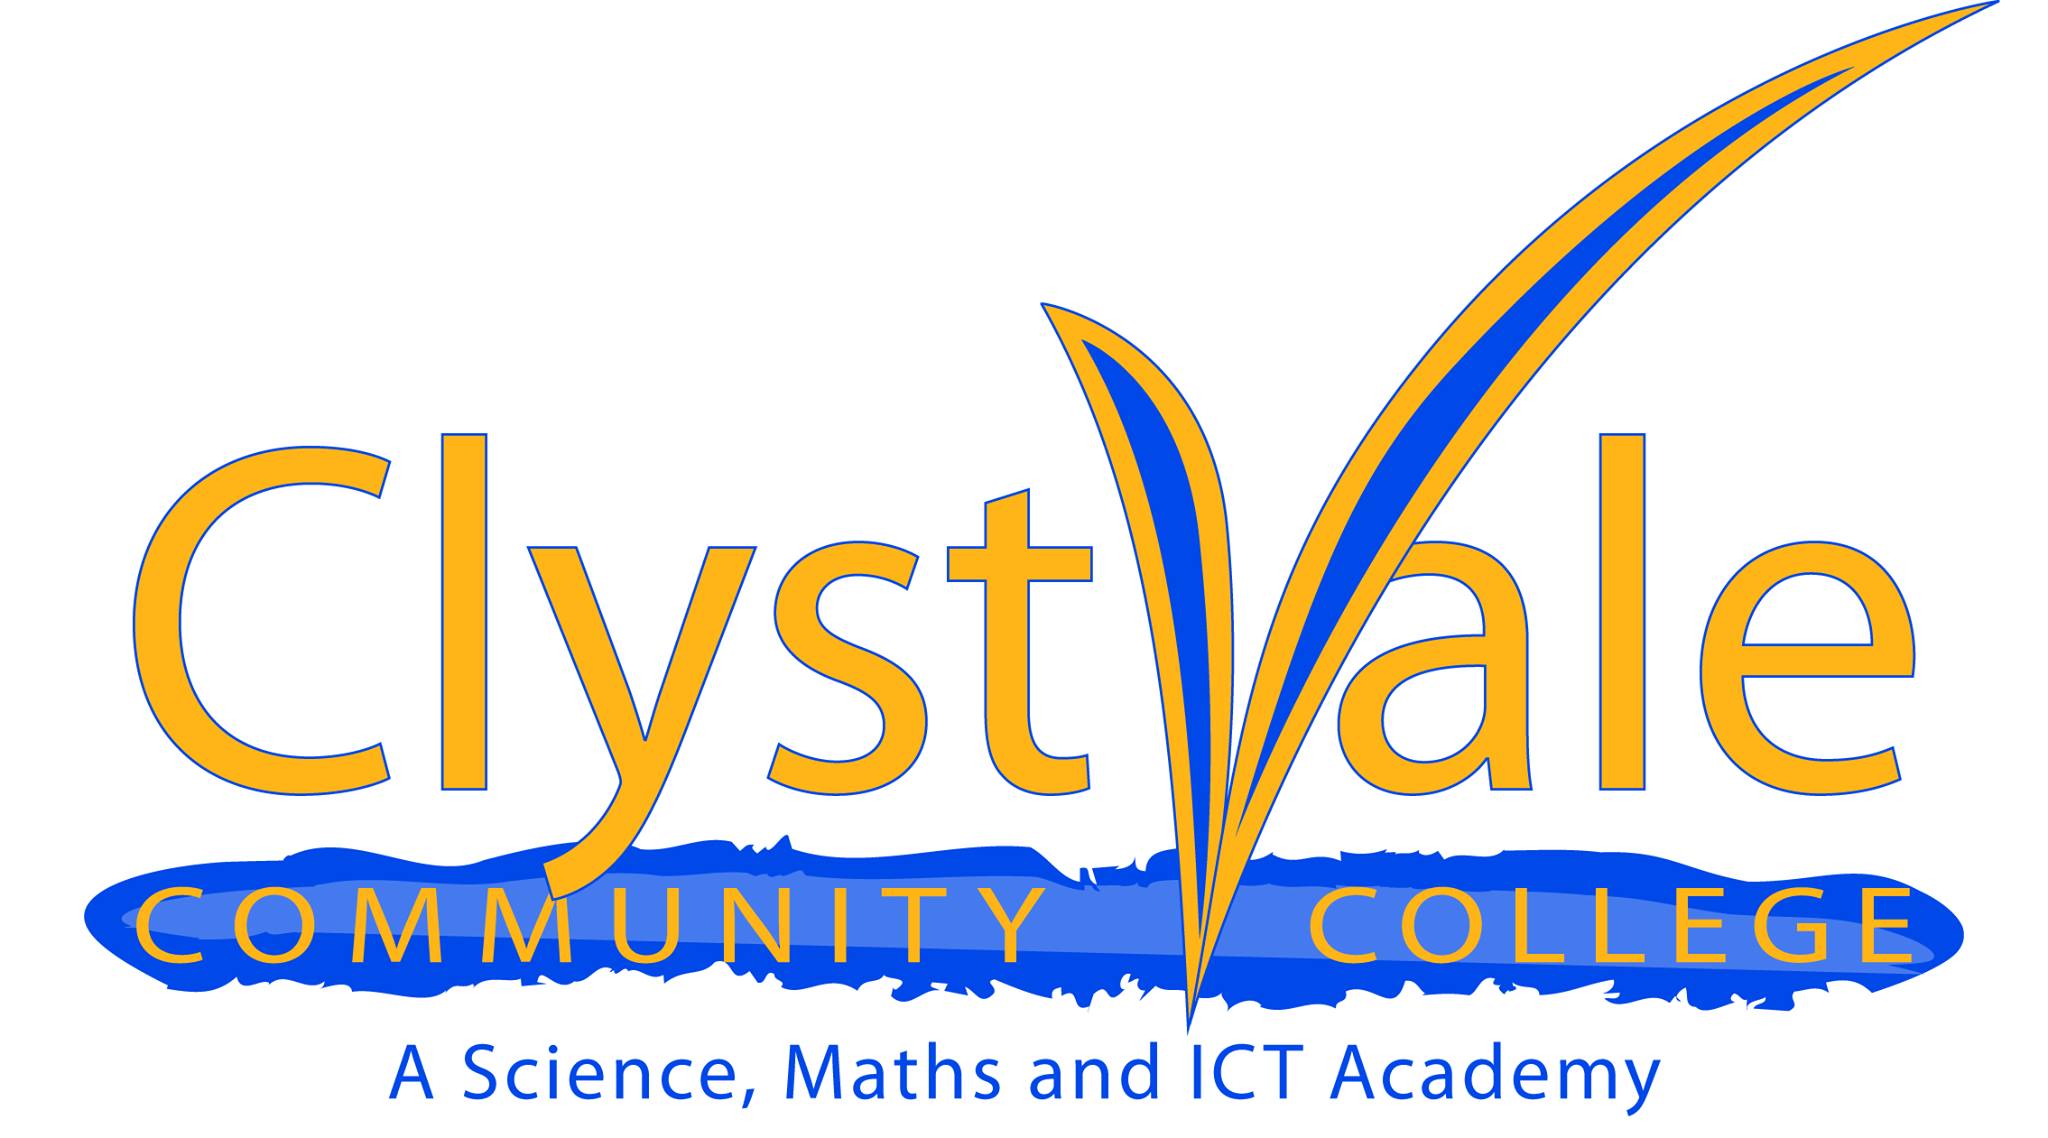 Clyst Vale Community College校徽